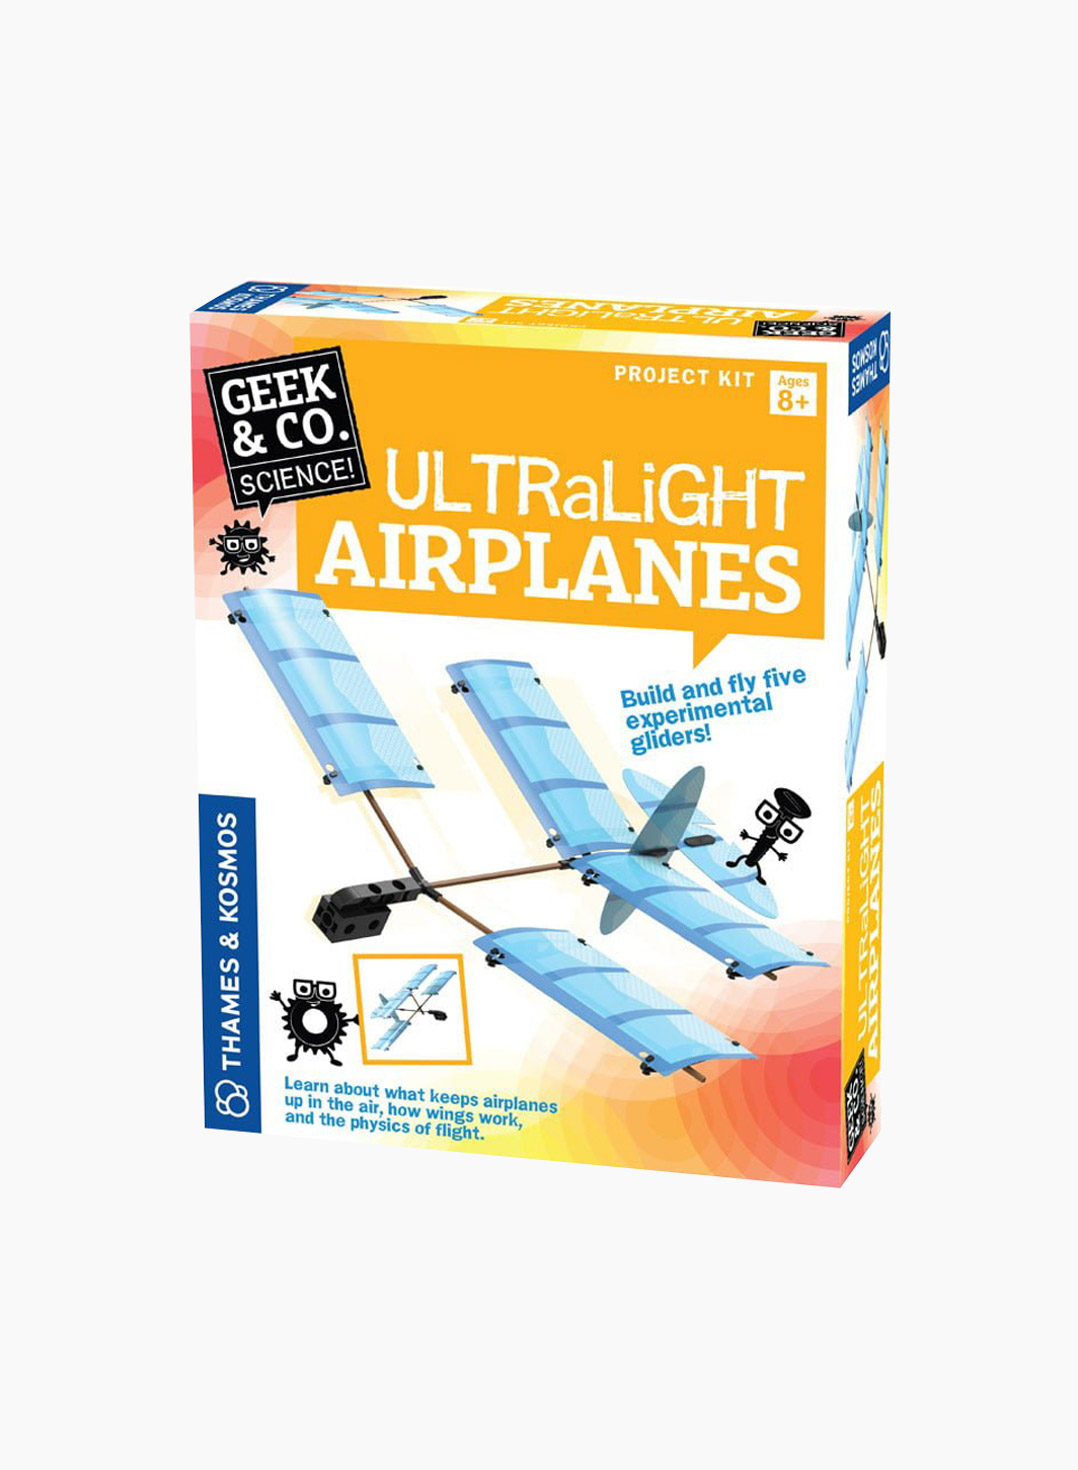 THAMES & KOSMOS Educational Game Ultralight Airplanes